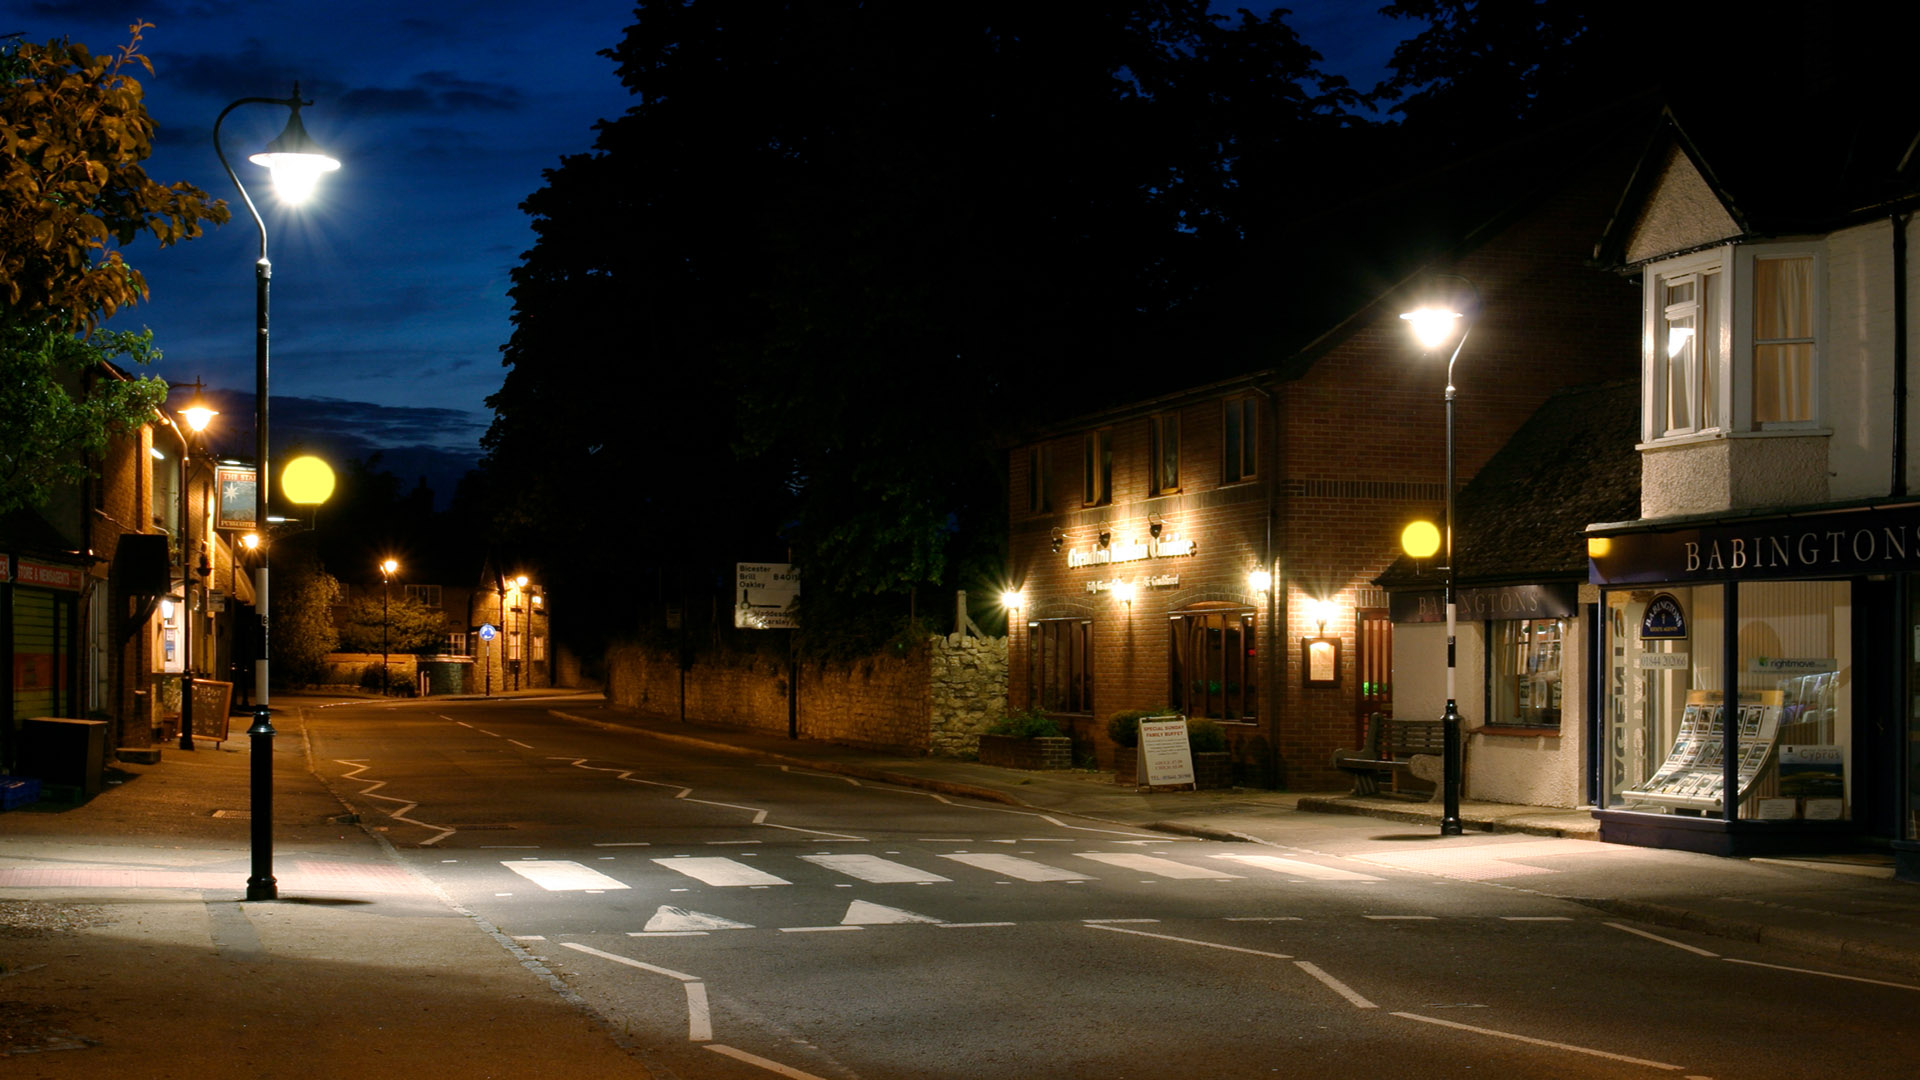 Ely C Heritage Street Lighting Location image 1920x1080px